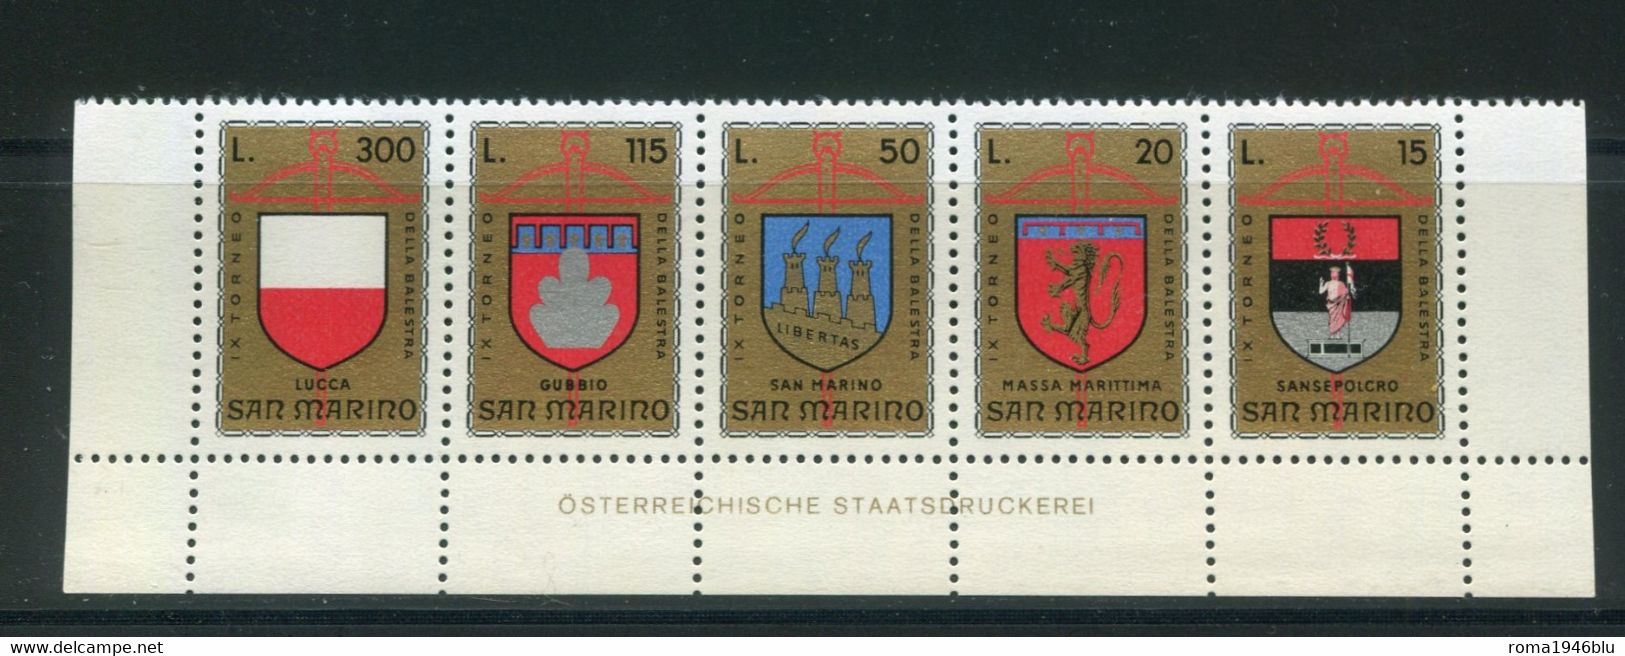 SAN MARINO 1974 BALESTRA 5 V. IN QUARTINA ** MNH - Unused Stamps